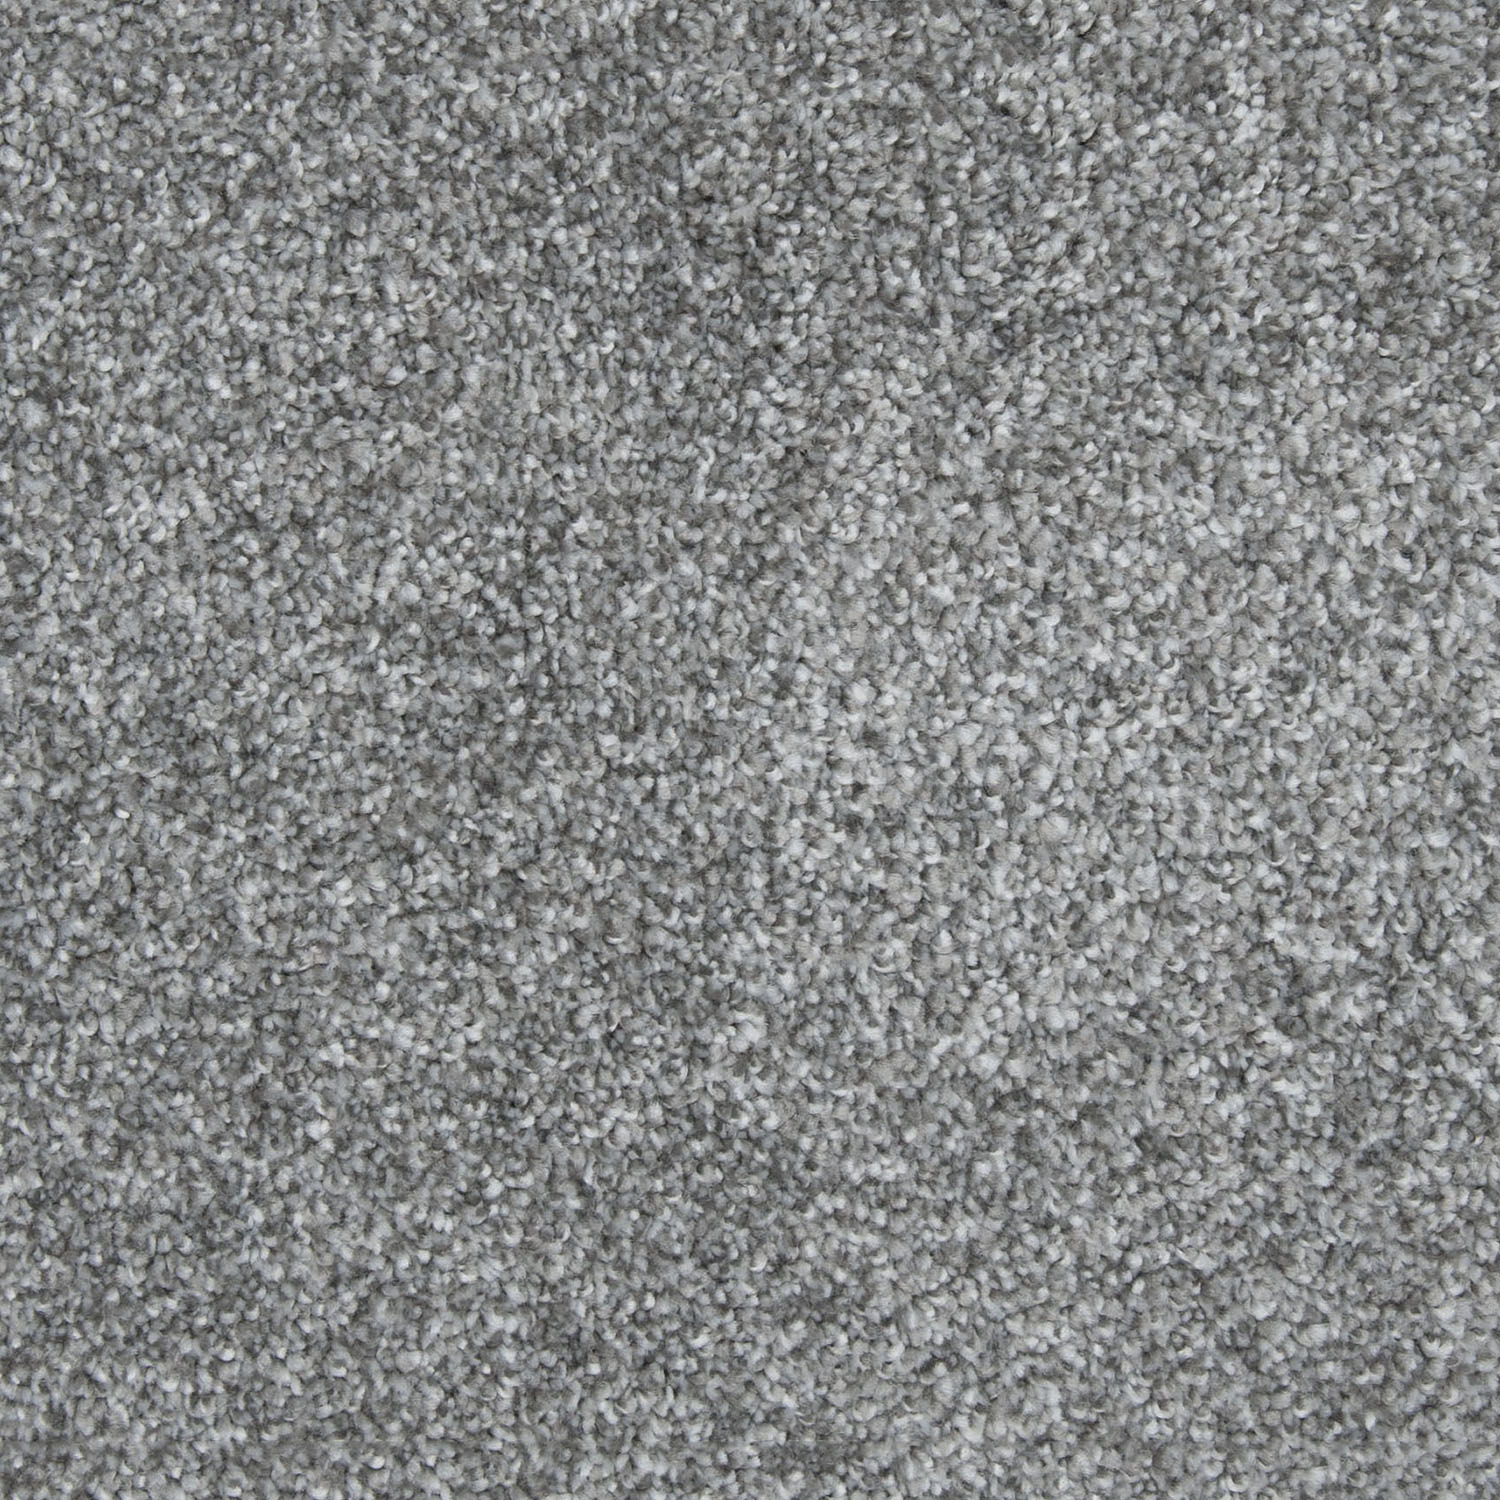 Carpet name: Aphrodite Granite Dust